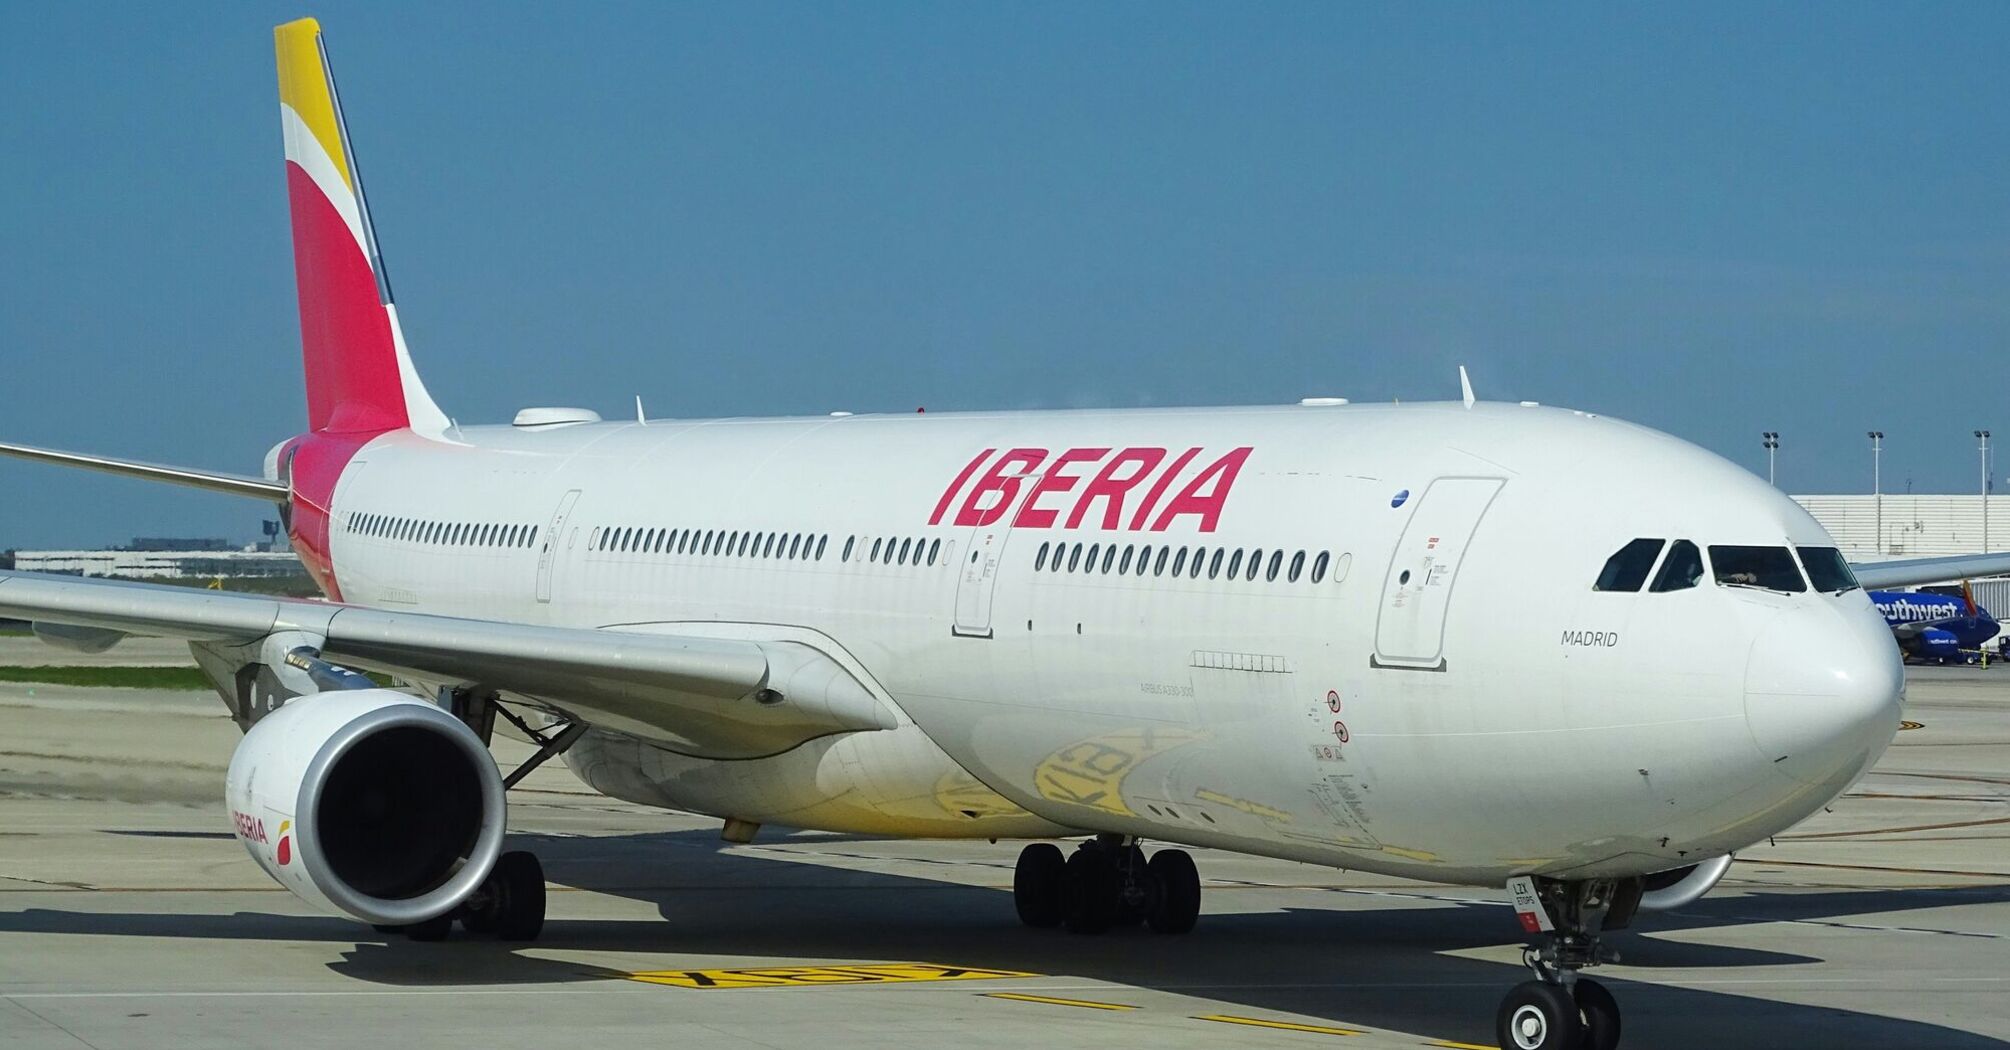 Iberias plane on the runway